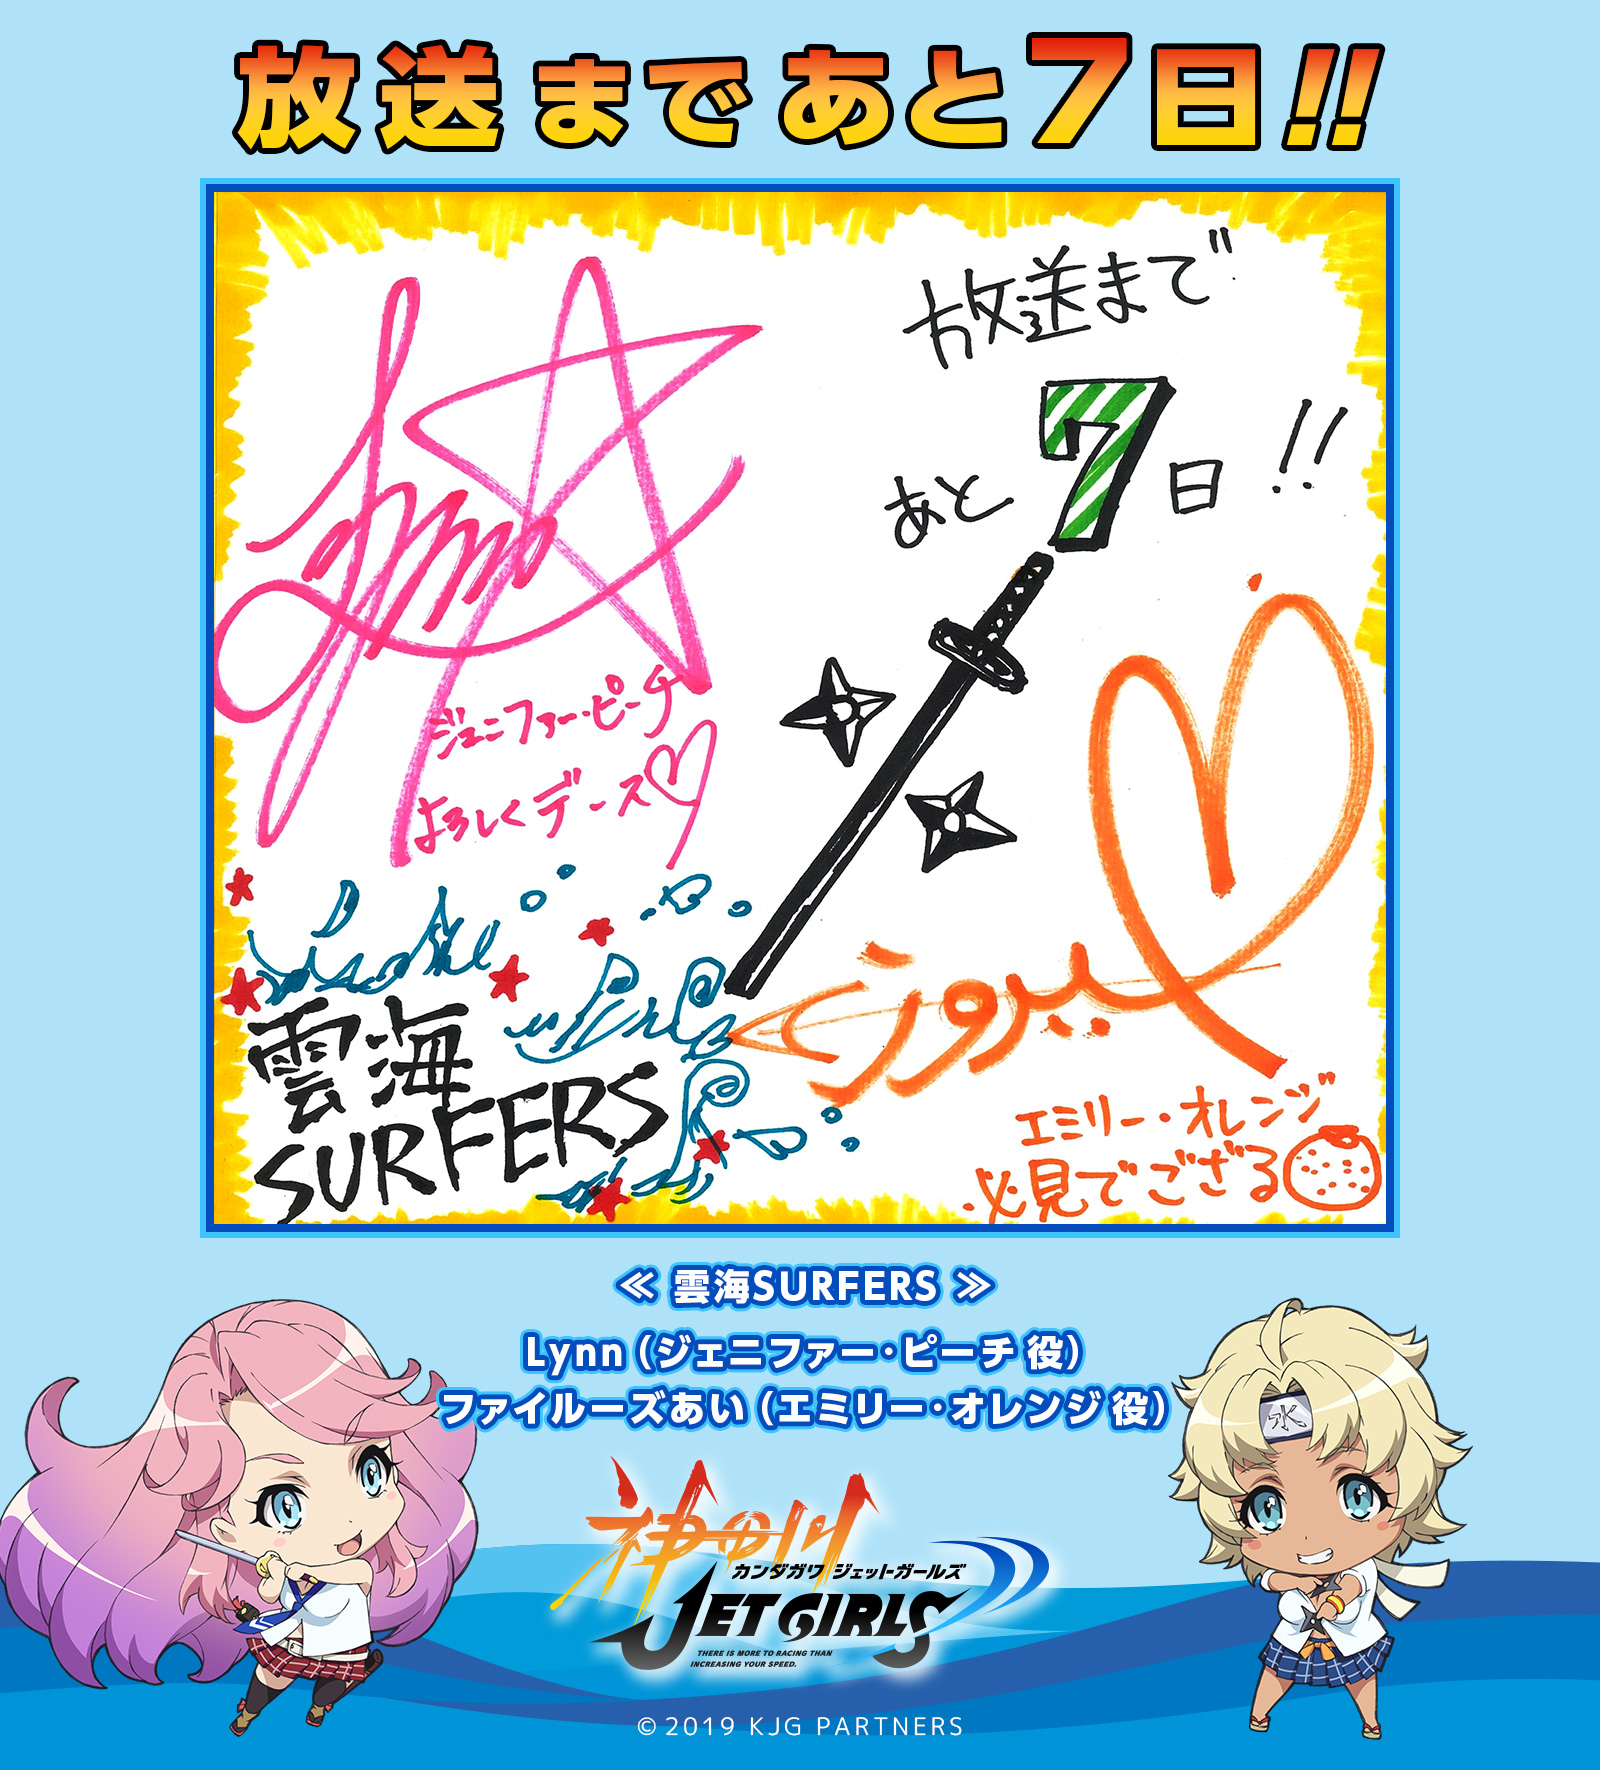 Special Tvアニメ 神田川 Jetgirls 公式サイト